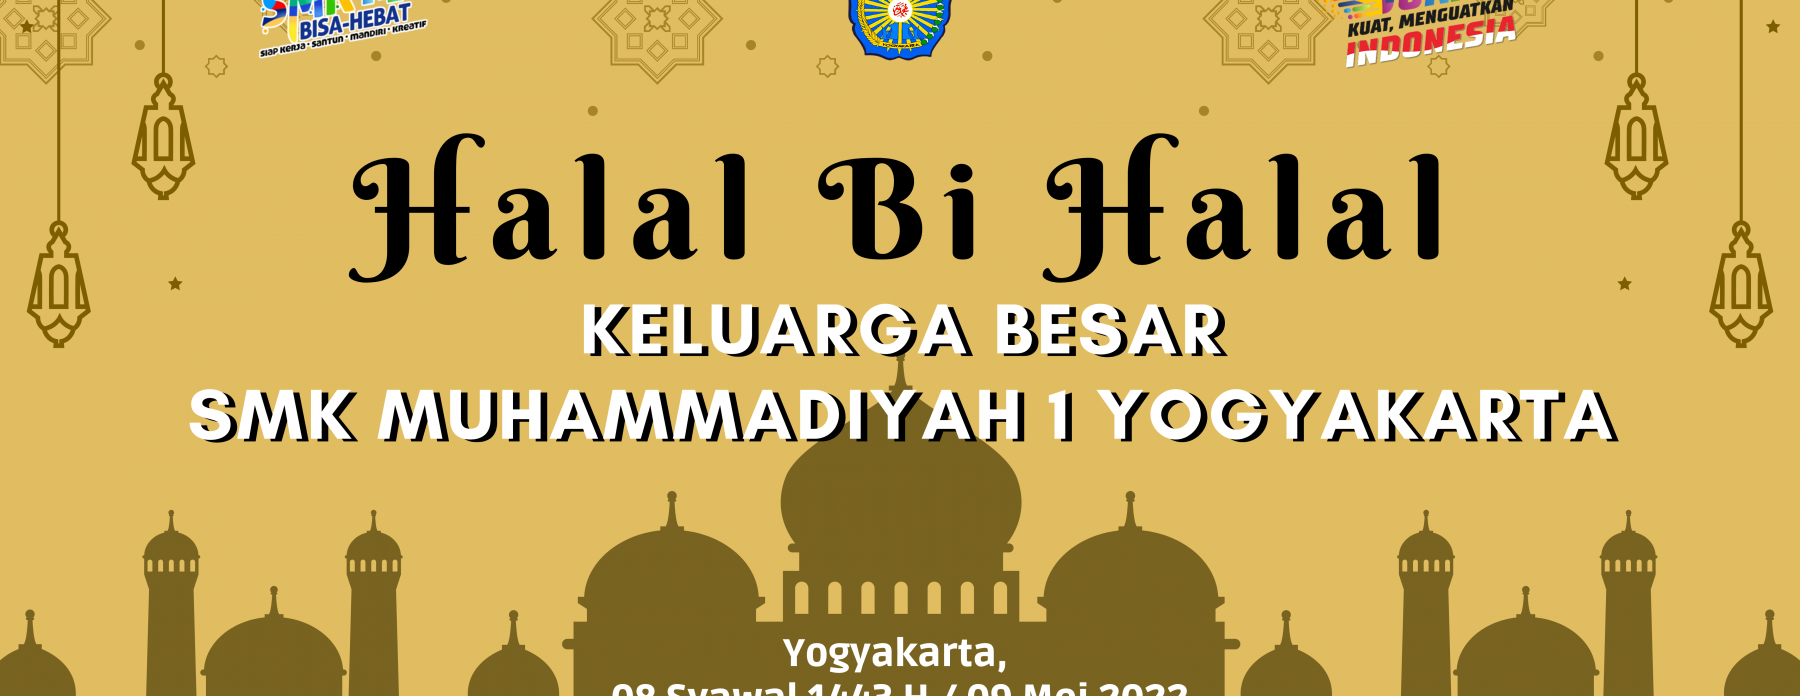 Halal bihalal Peserta Didik merupakan agenda pertama masuk sekolah, setelah libur akhir Ramadhan dan Hari Raya Idul Fitri